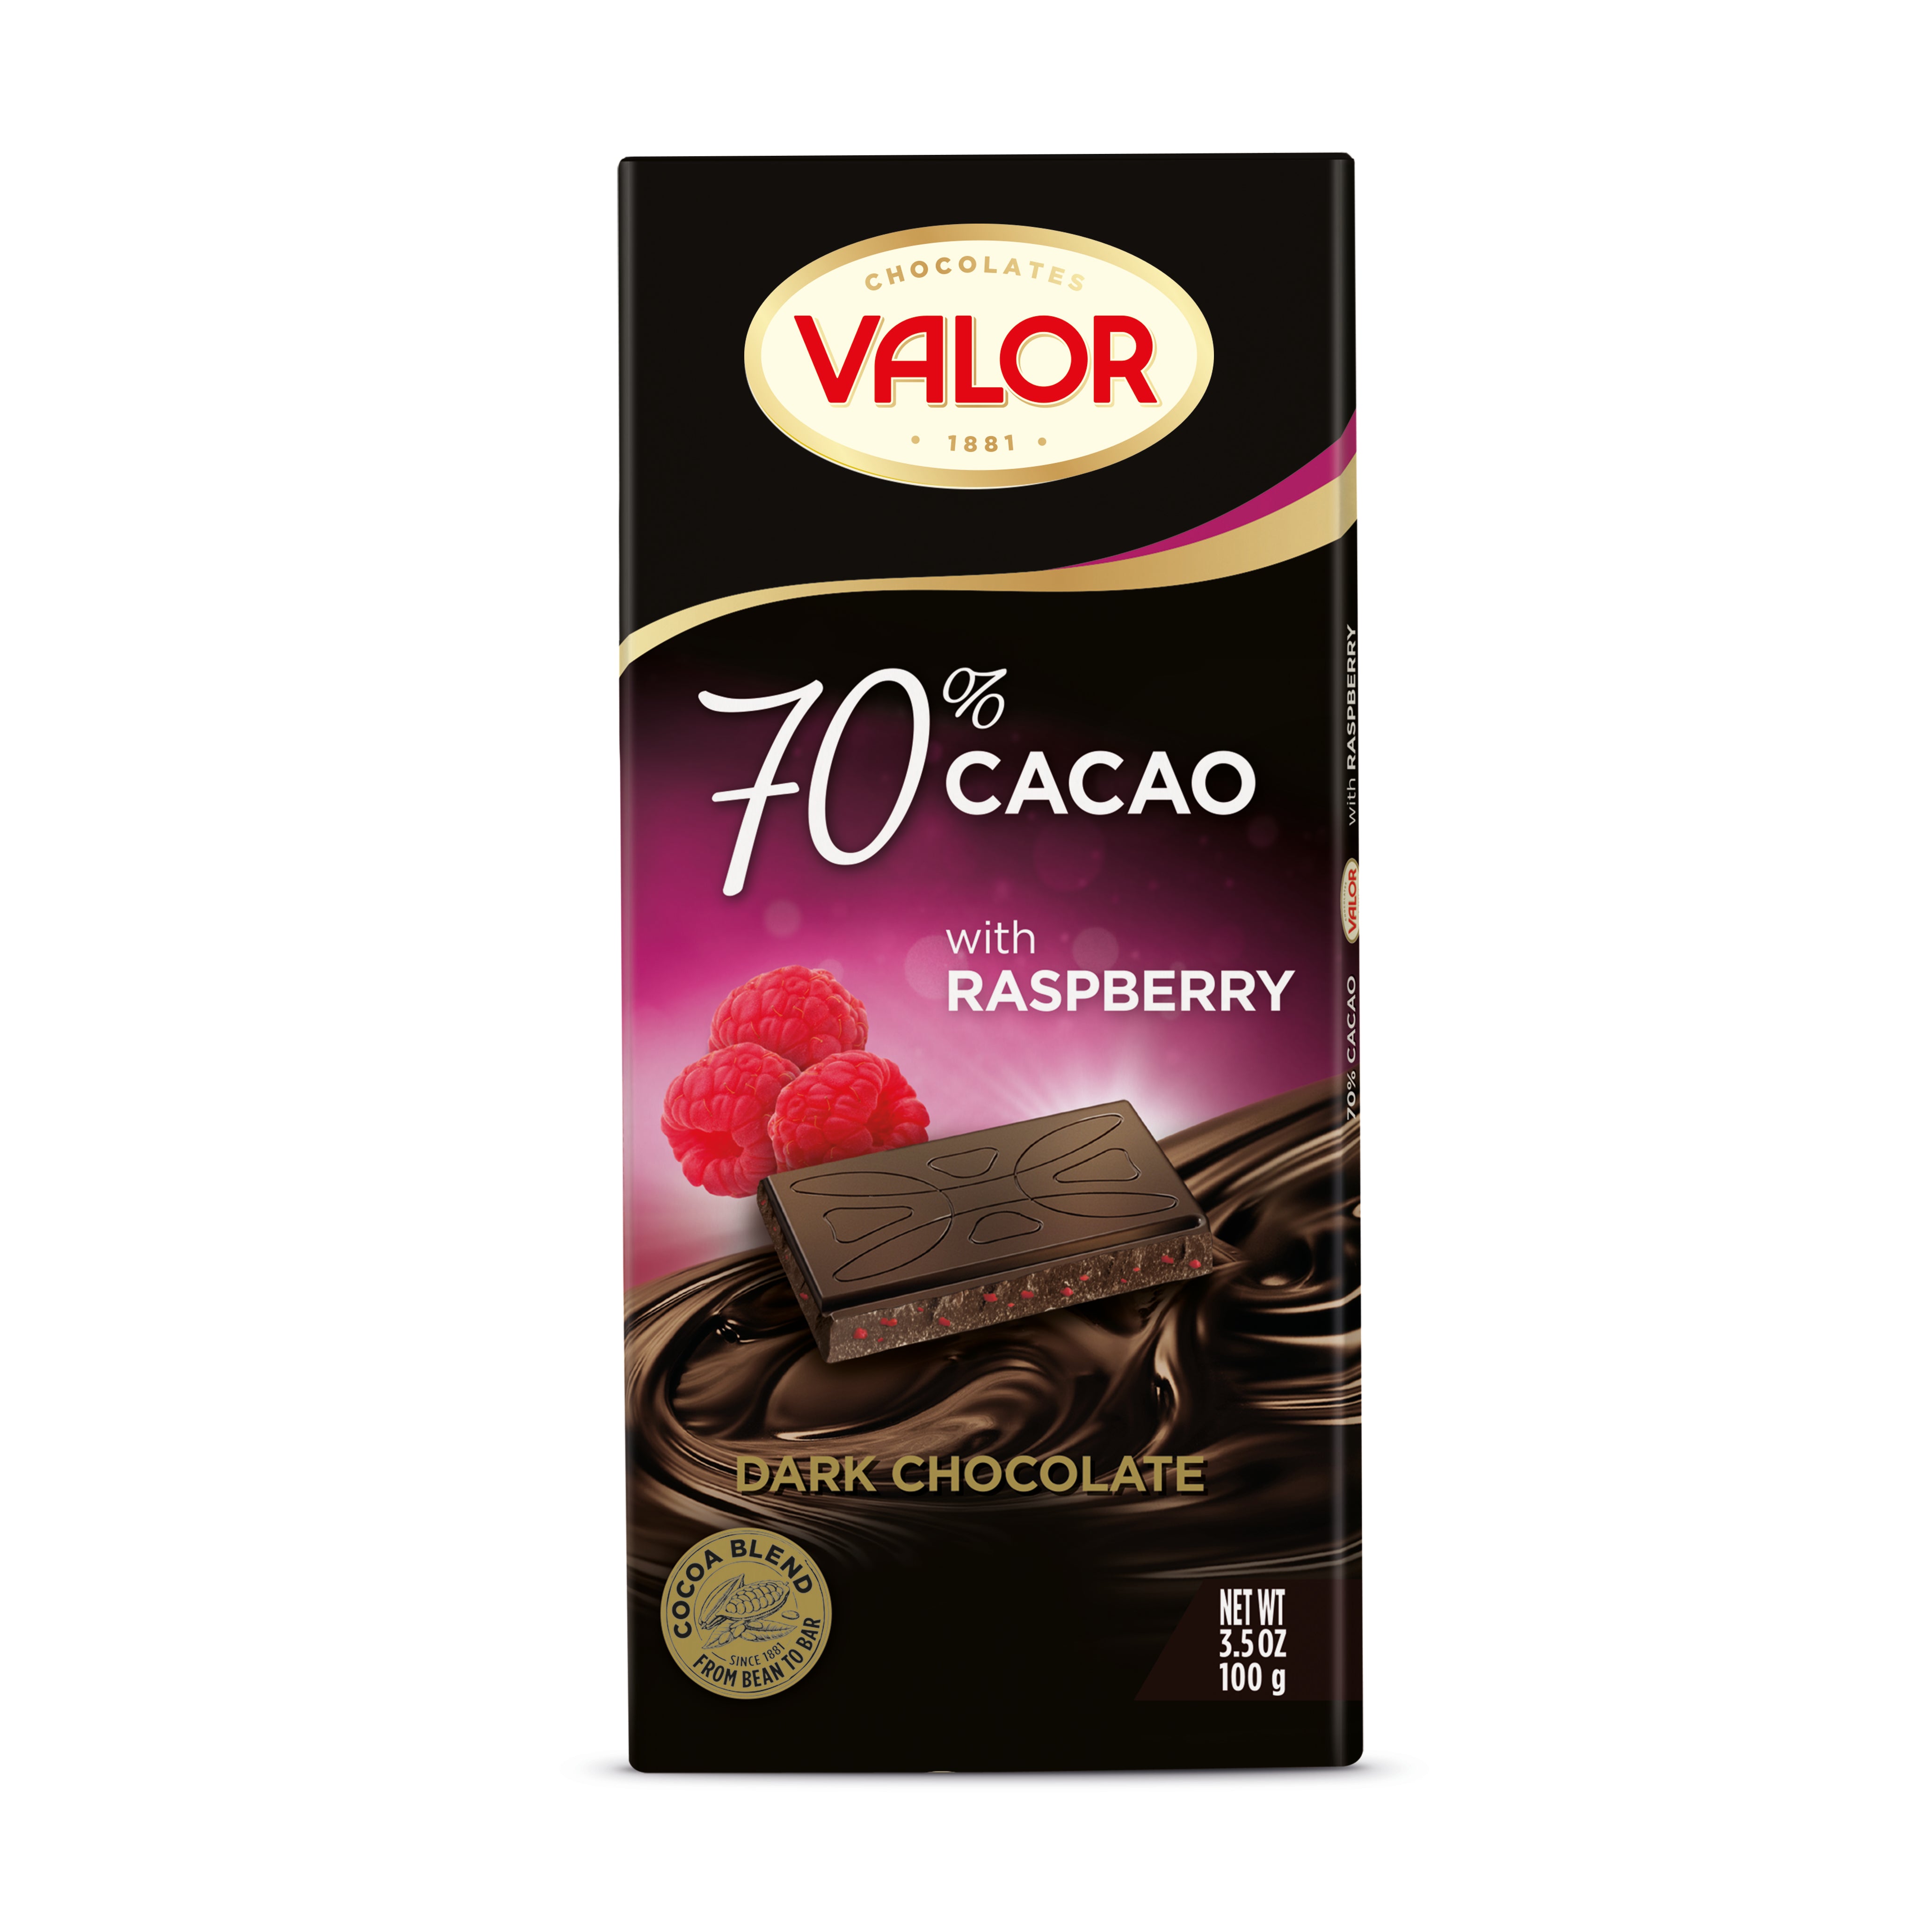 Dark chocolate - Valor - 9